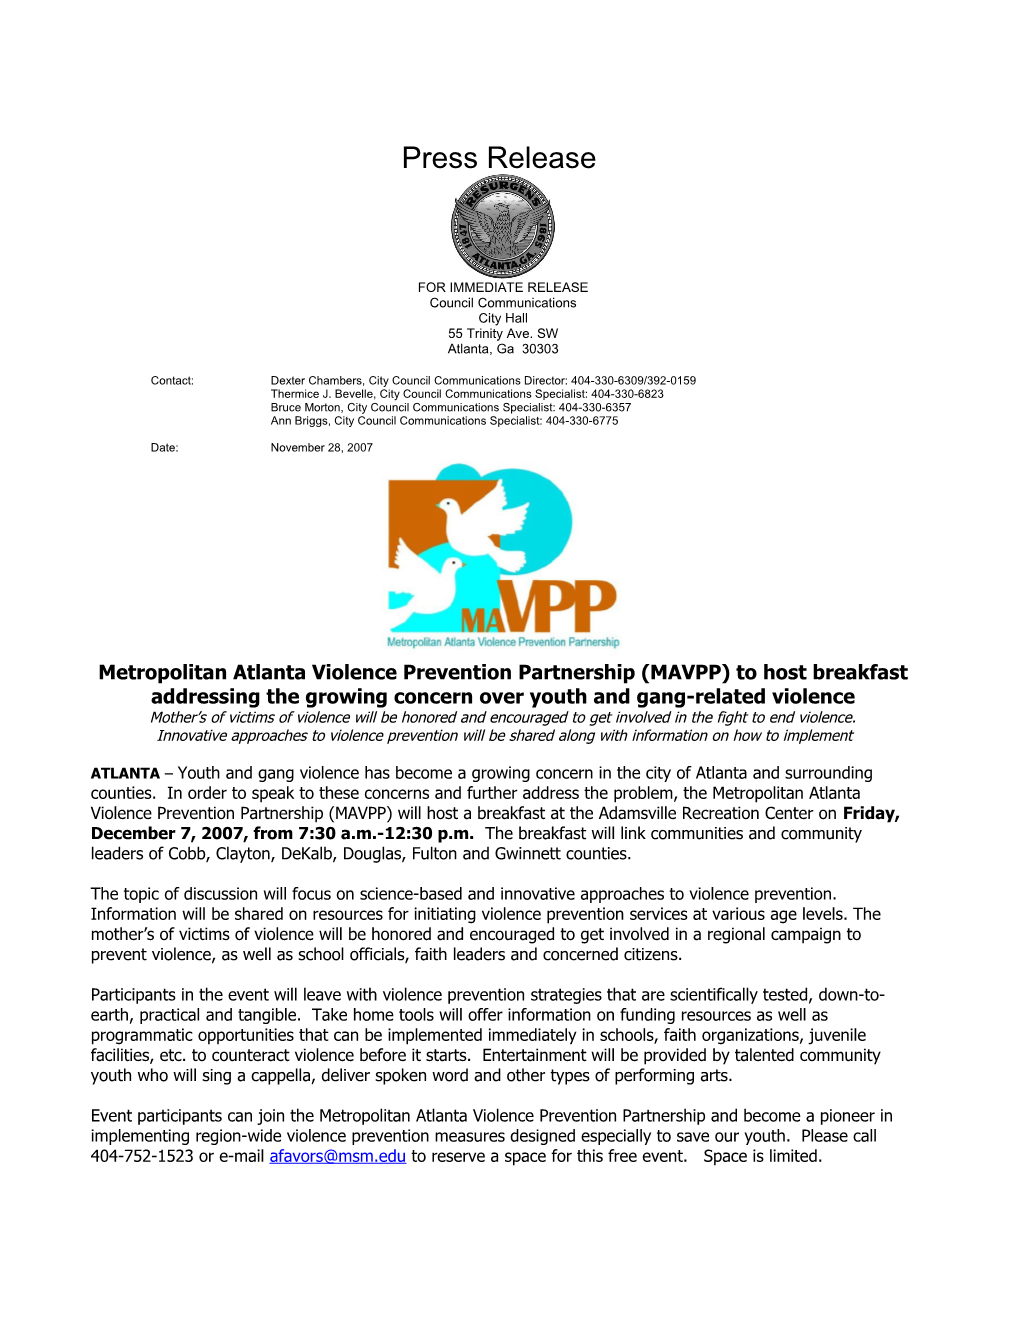 The Metropolitan Atlanta Violence Prevention Partnership (MAVPP)